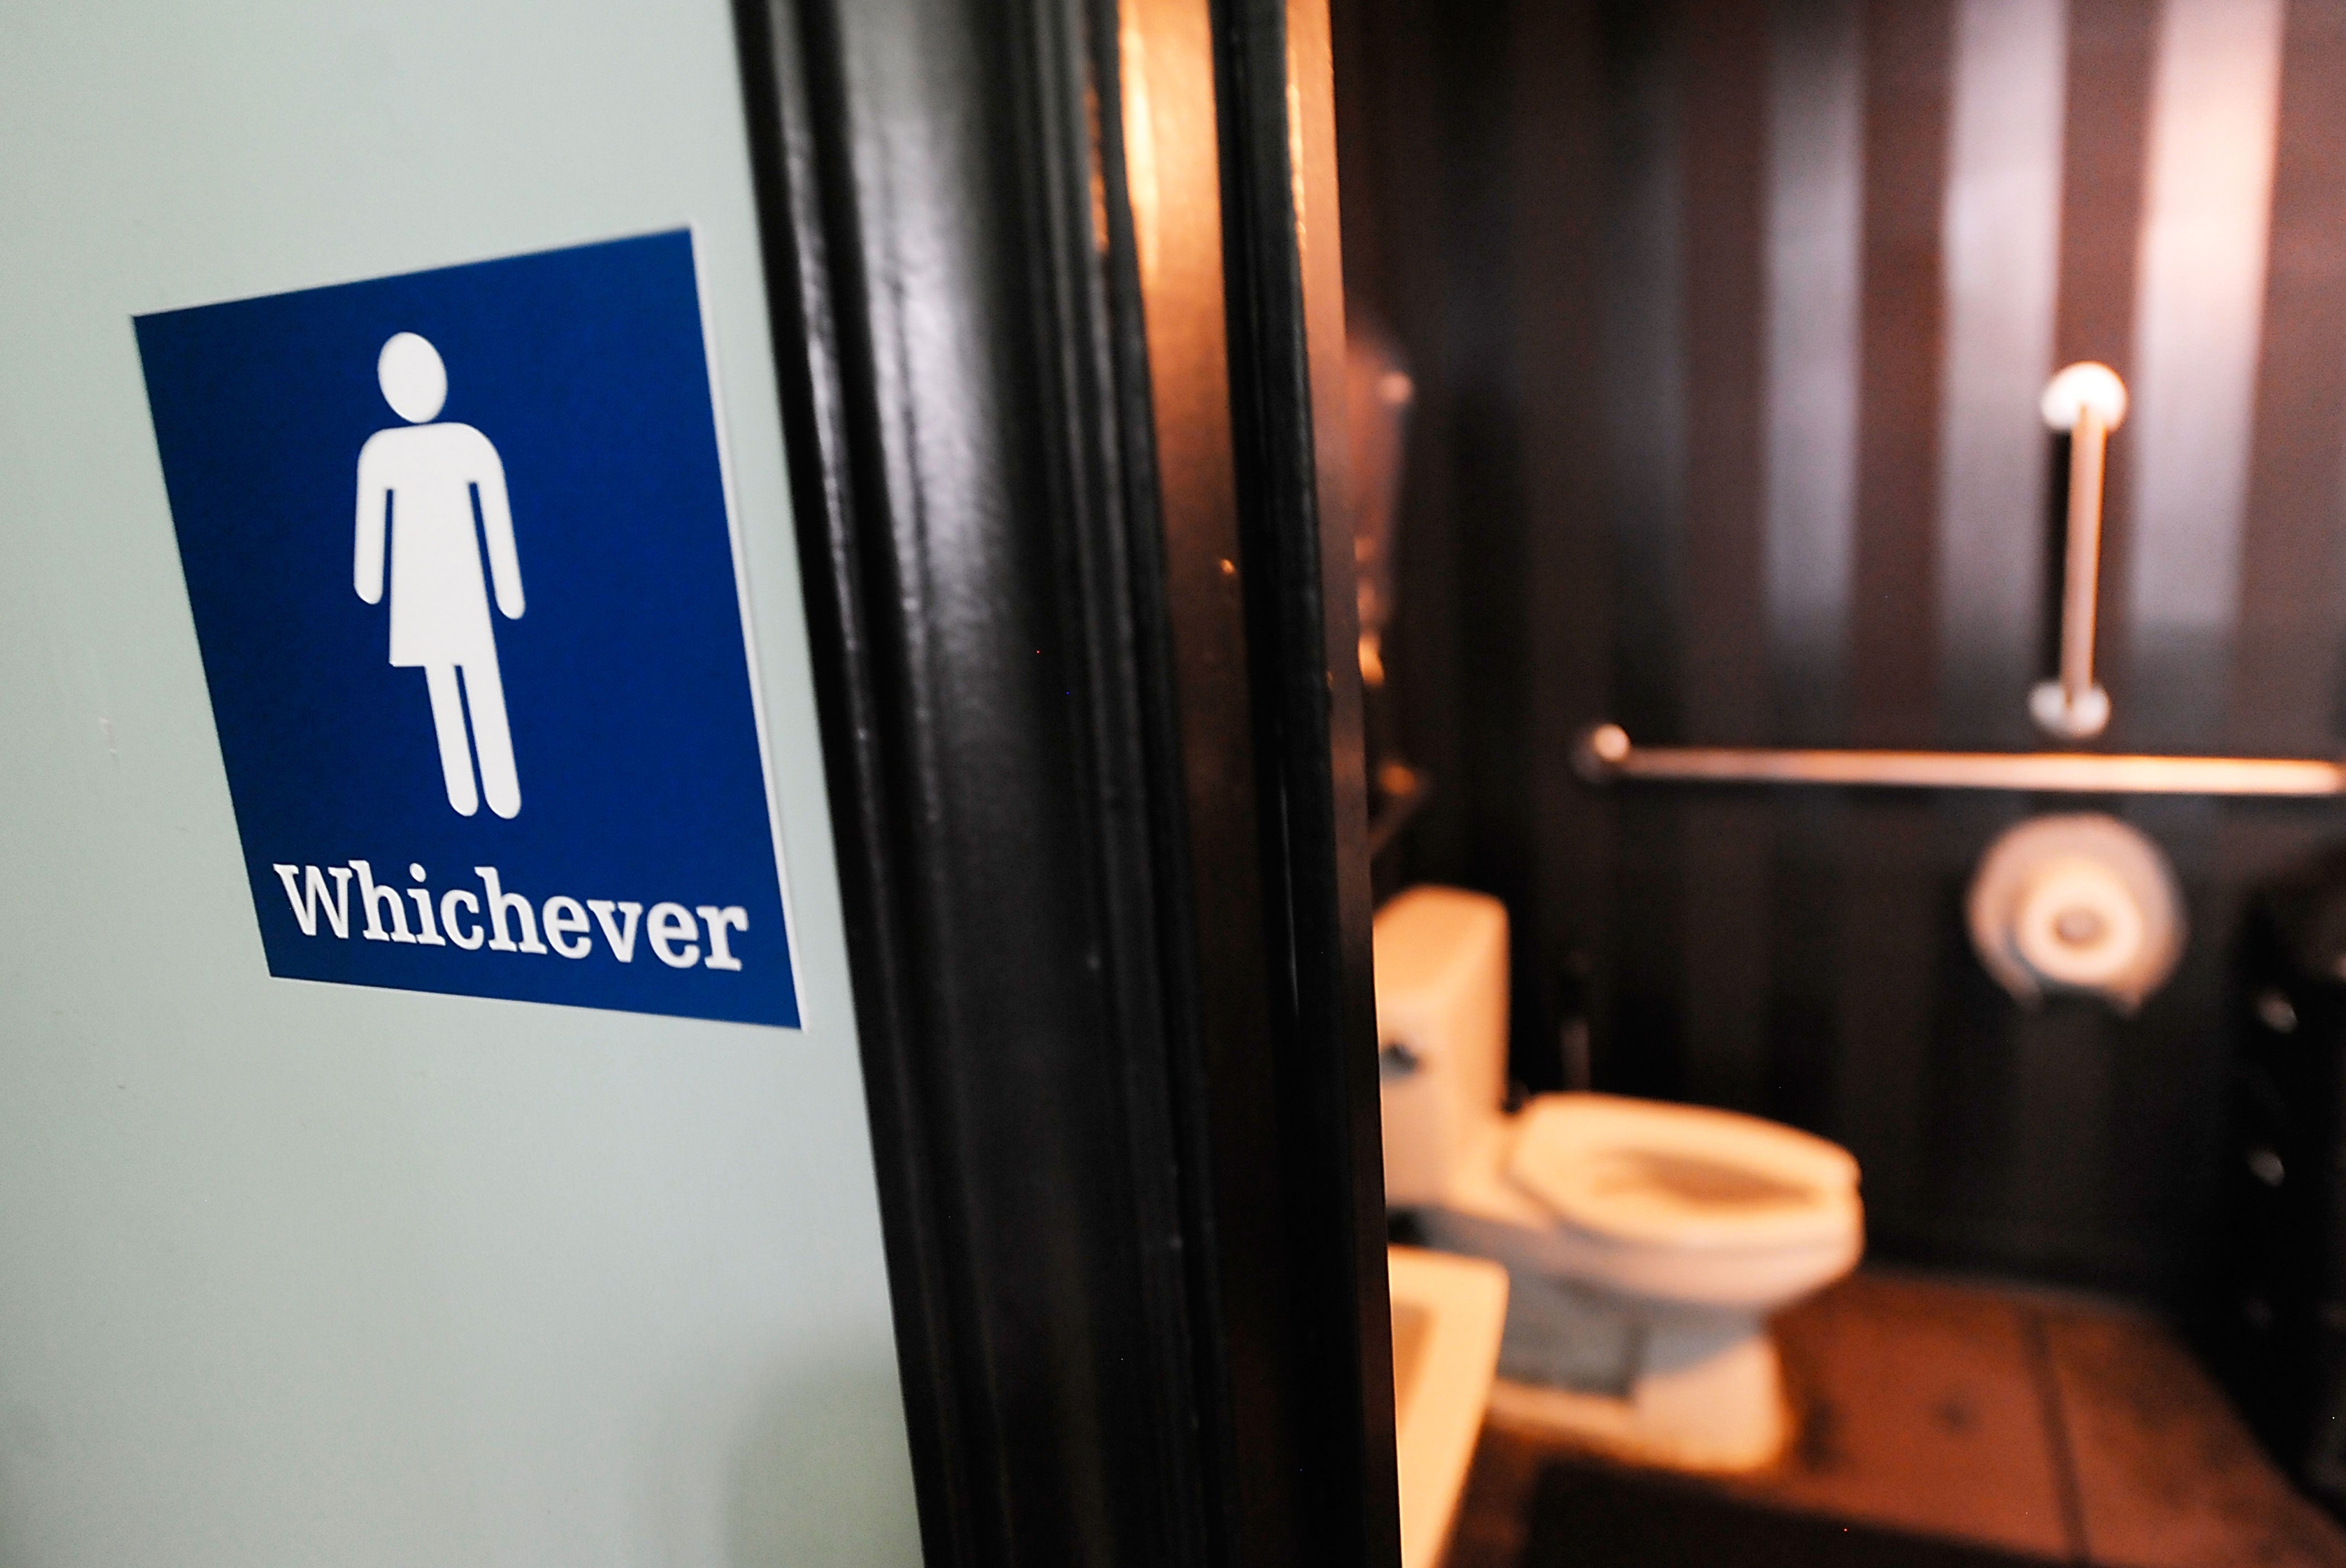 President Obama Addresses Bathroom Access for Transgender Students
